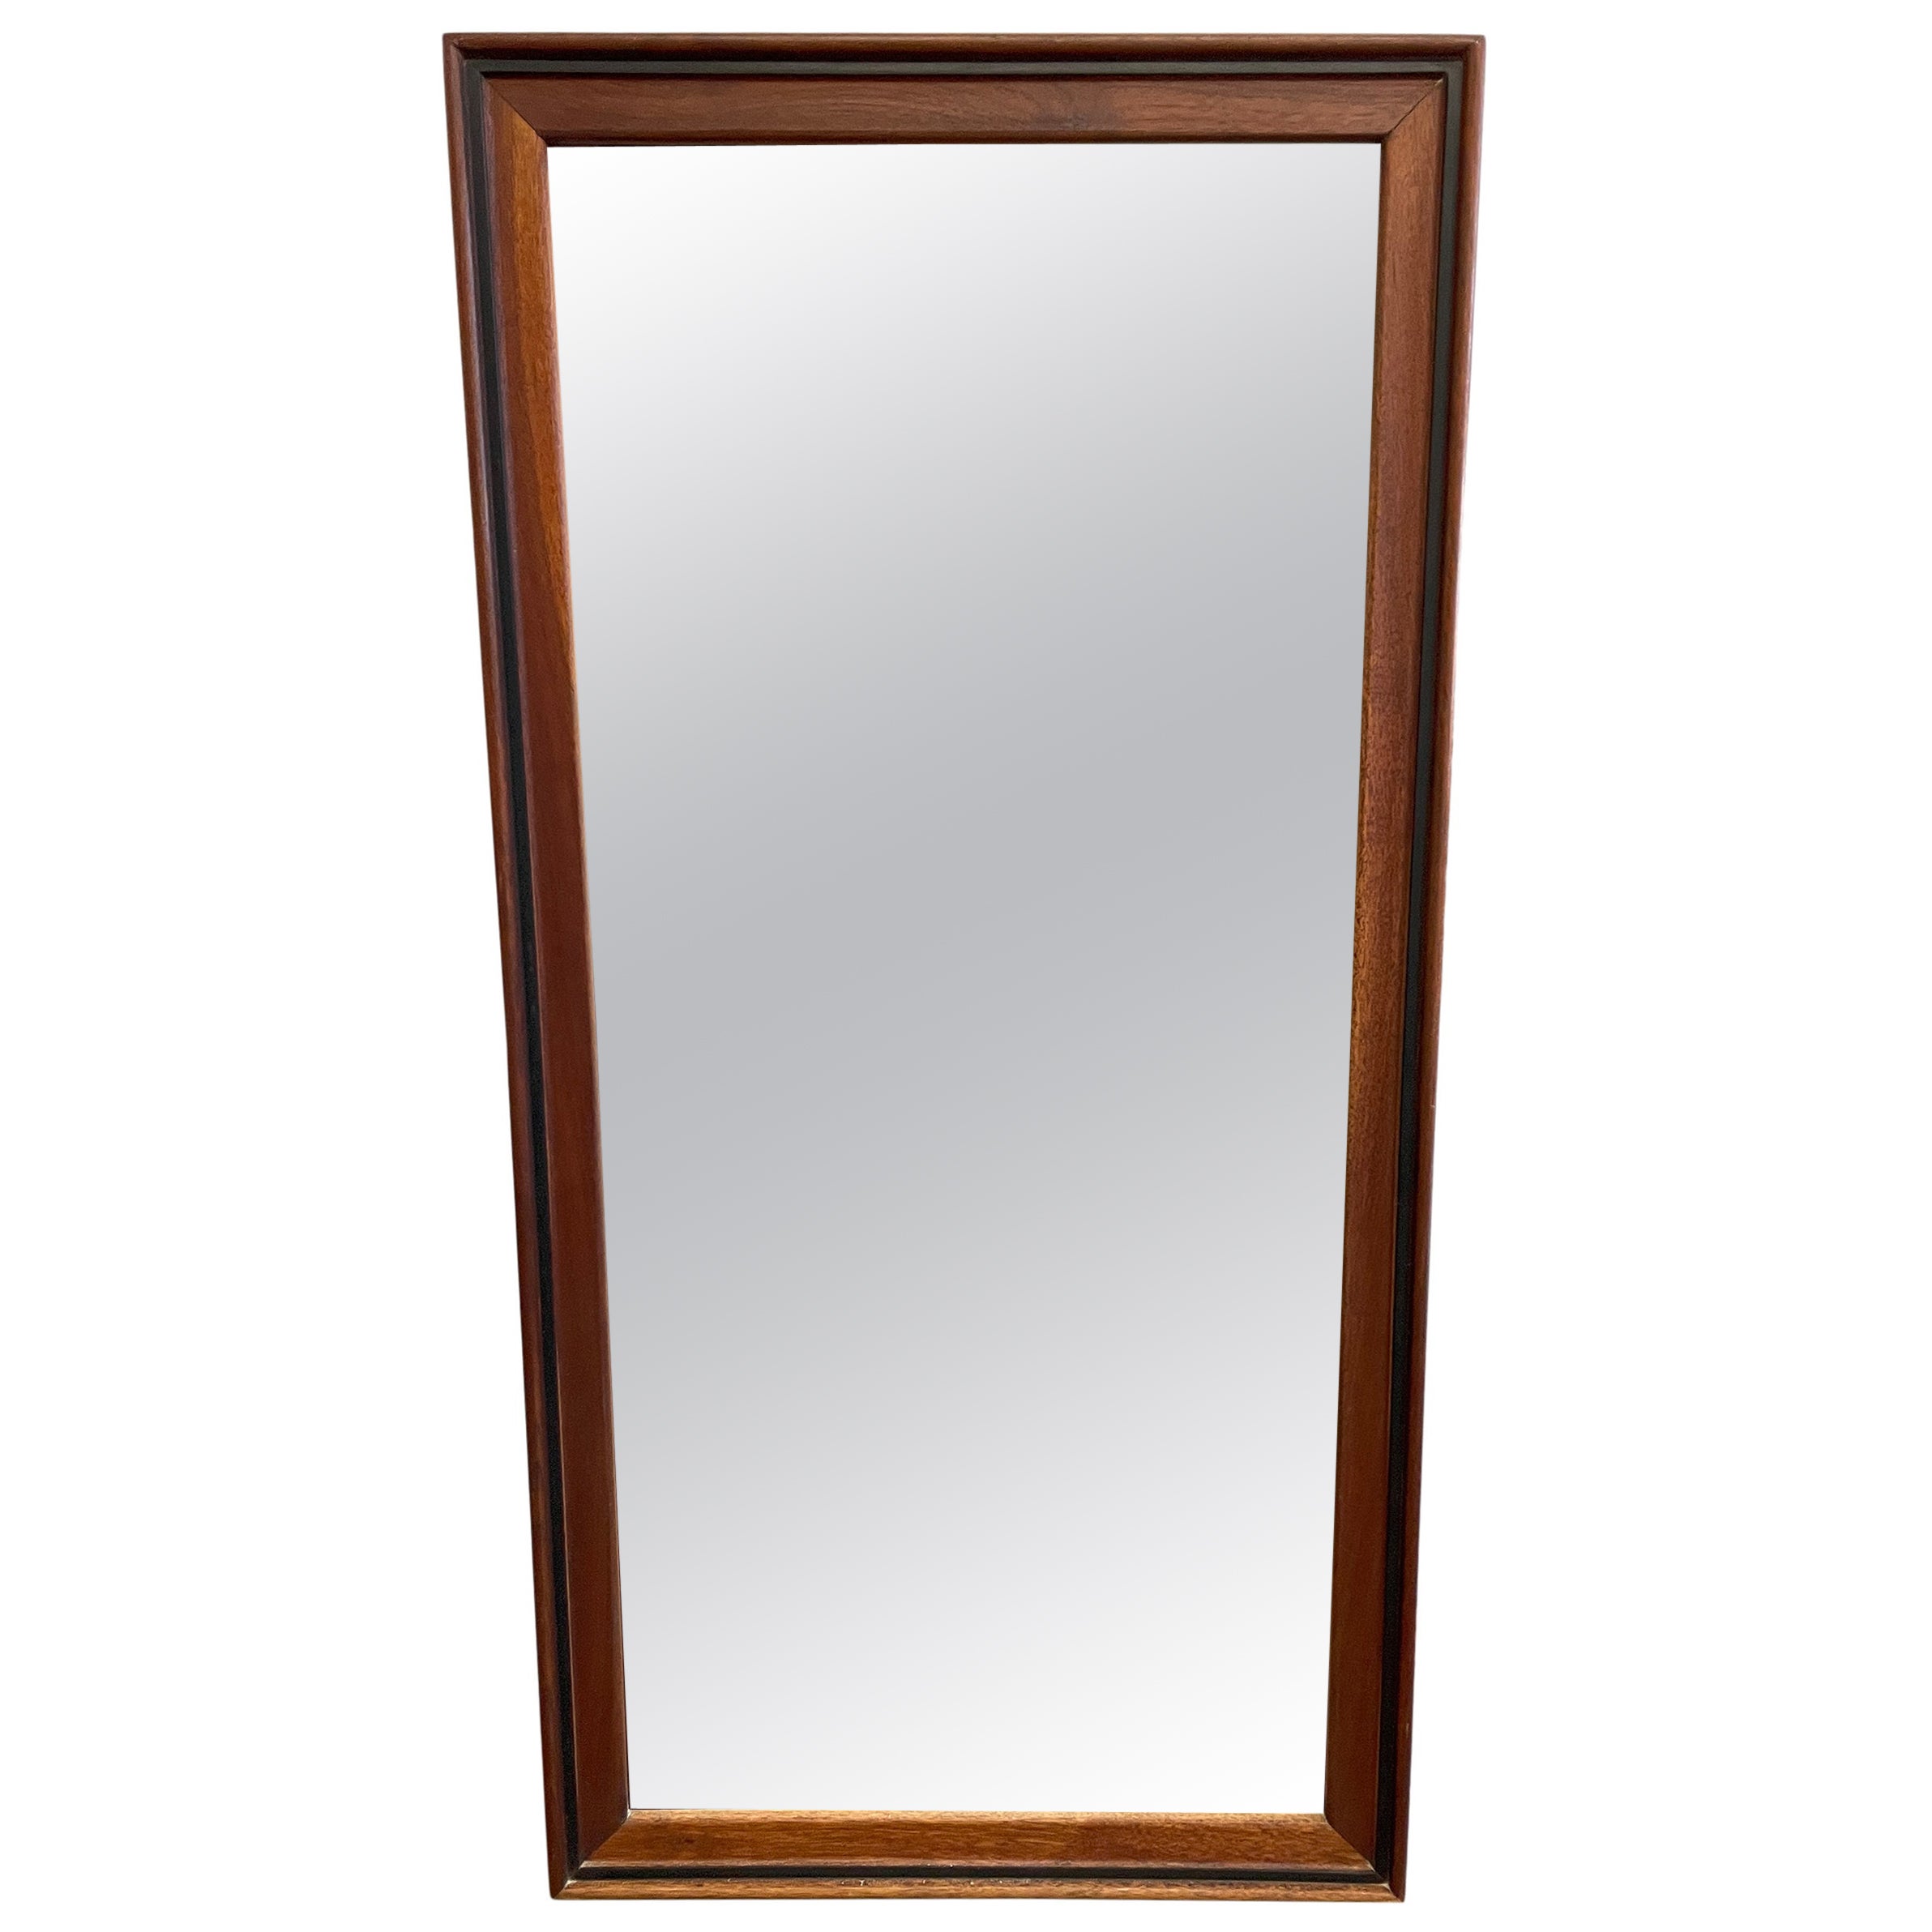 Midcentury Danish Modern Teak Wood Narrow Wall Mirror For Sale